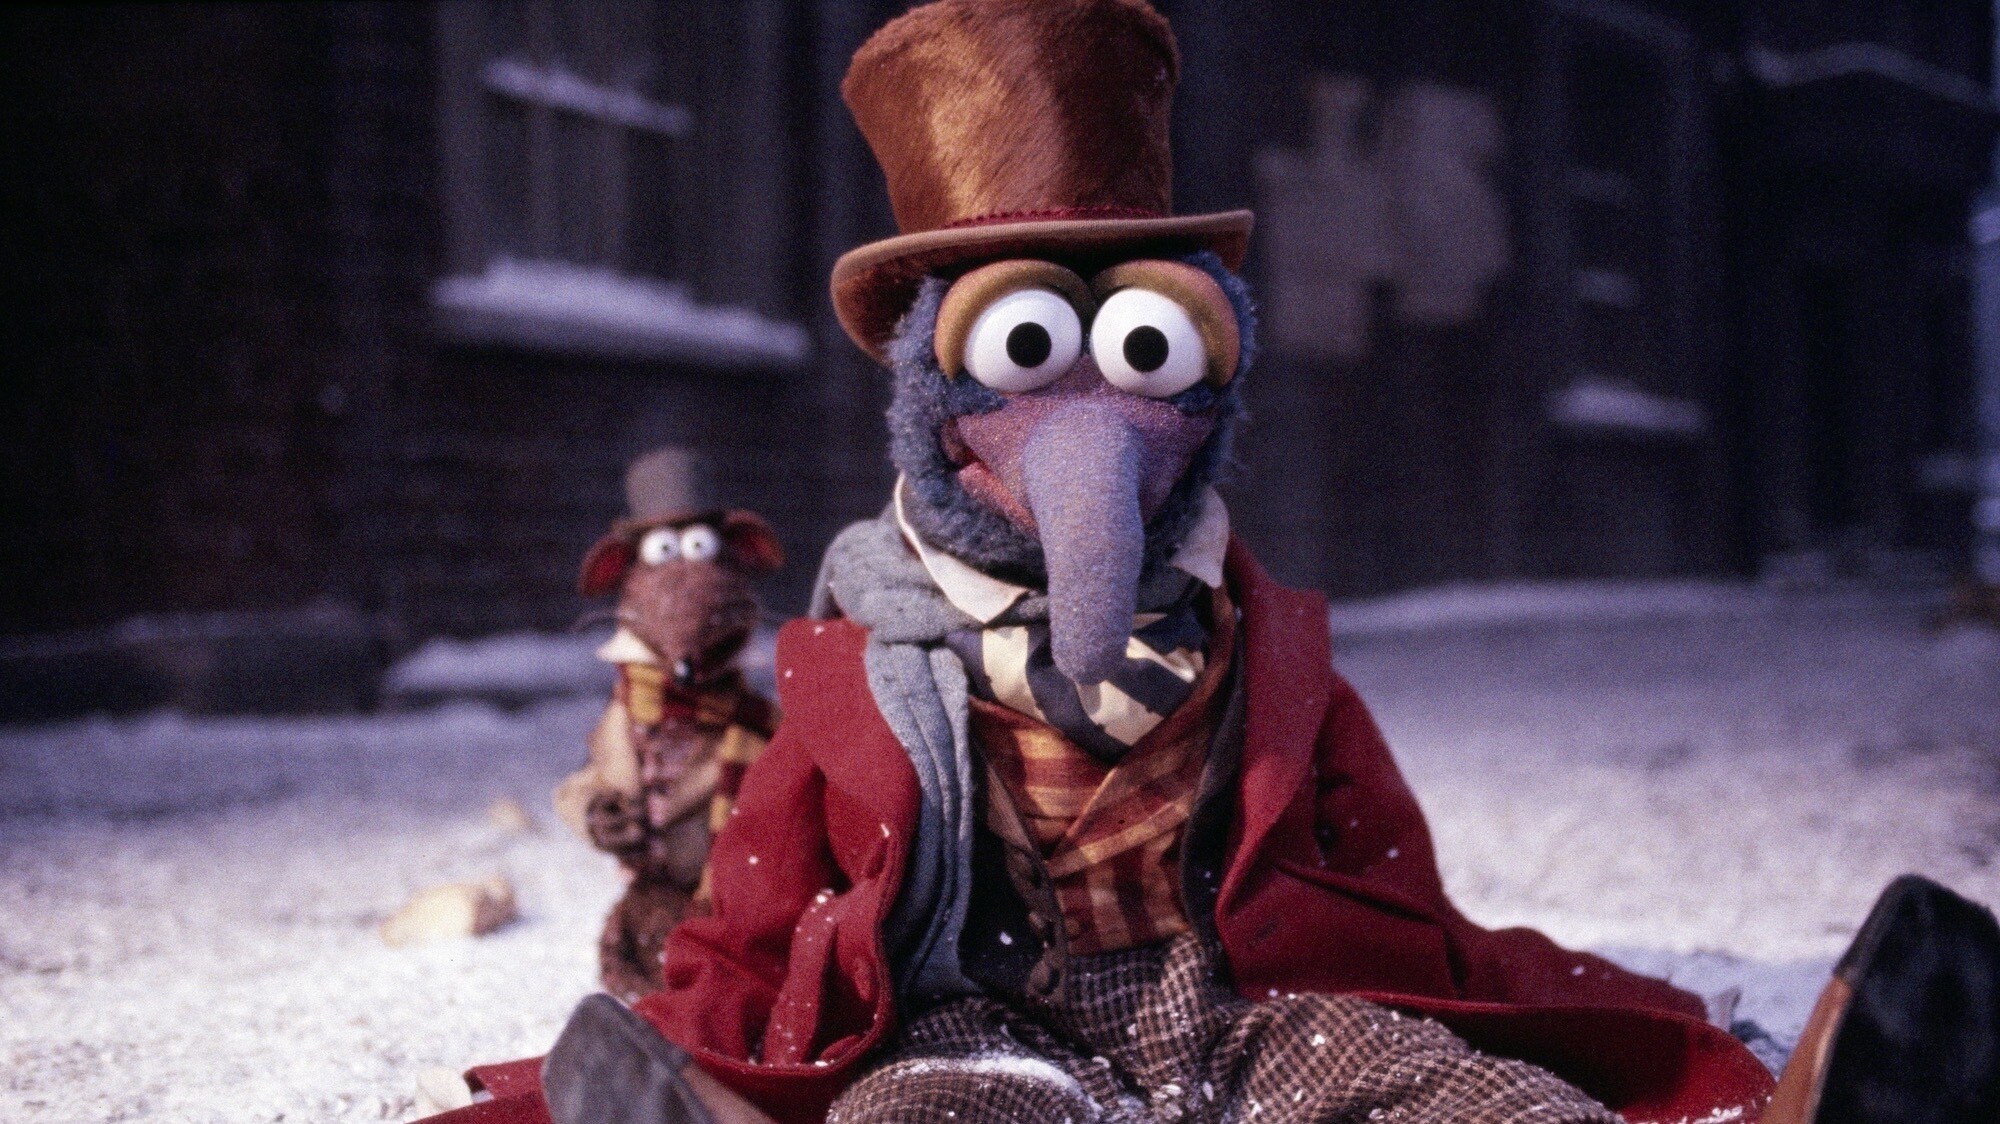 The Muppet Christmas Carol / © The Muppets Studio